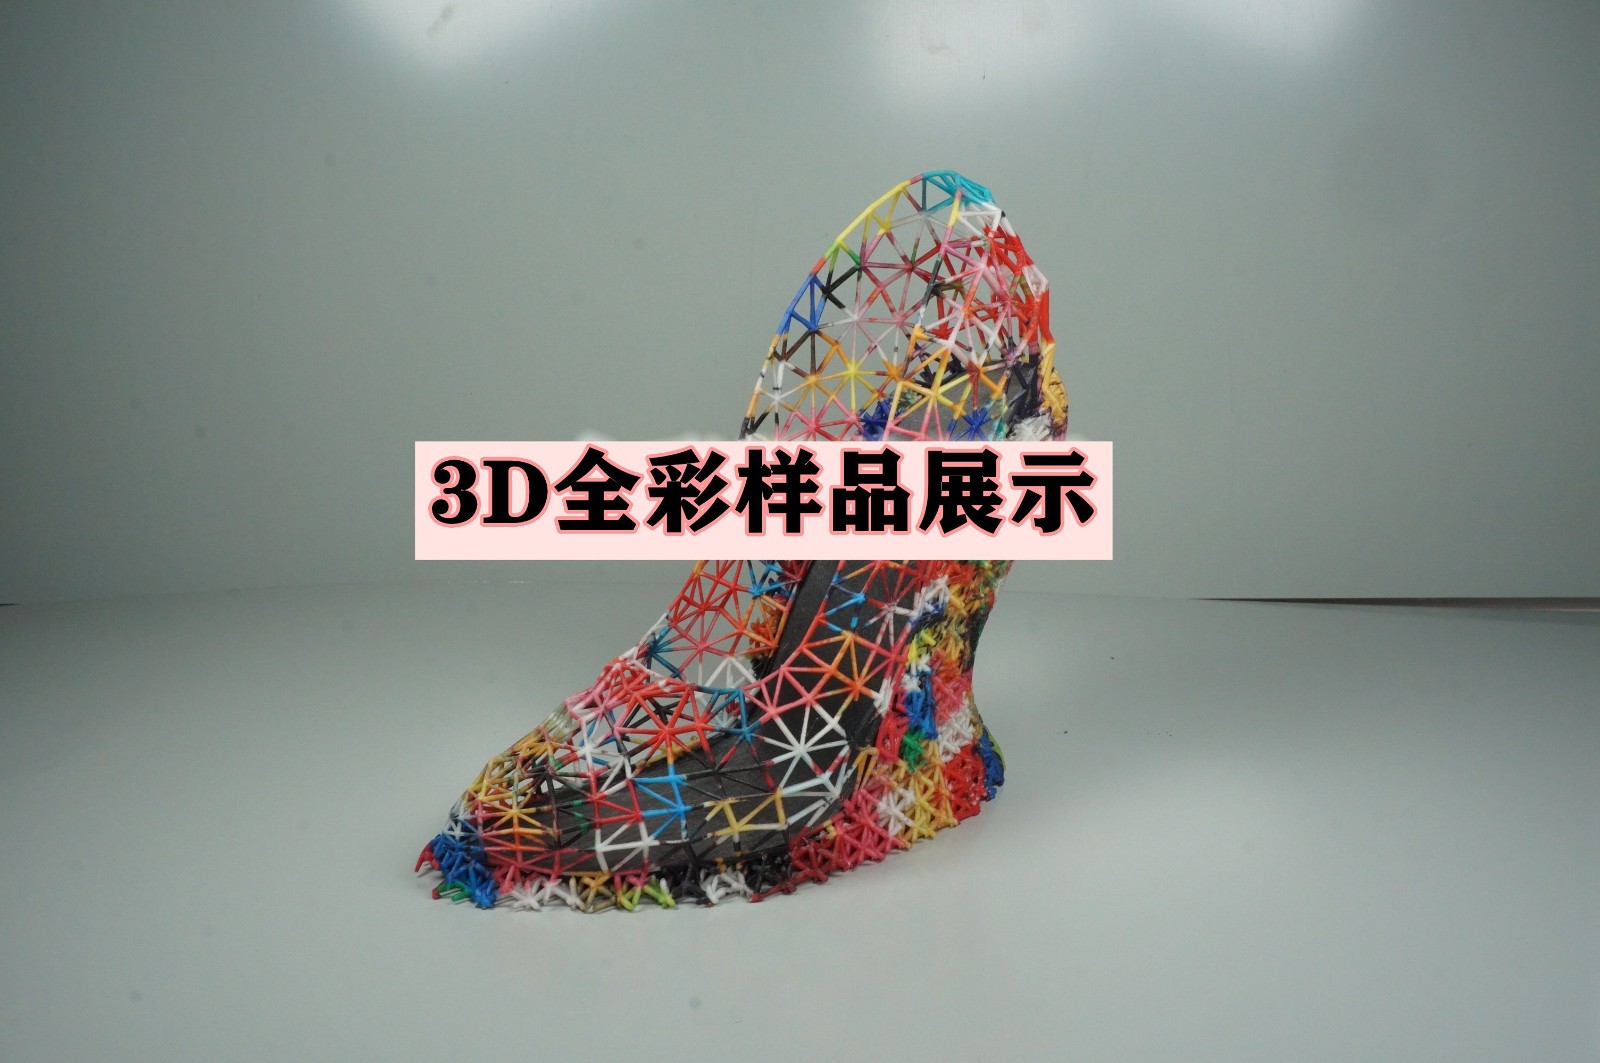 Samples Printed by UV 3D Full Color Printer